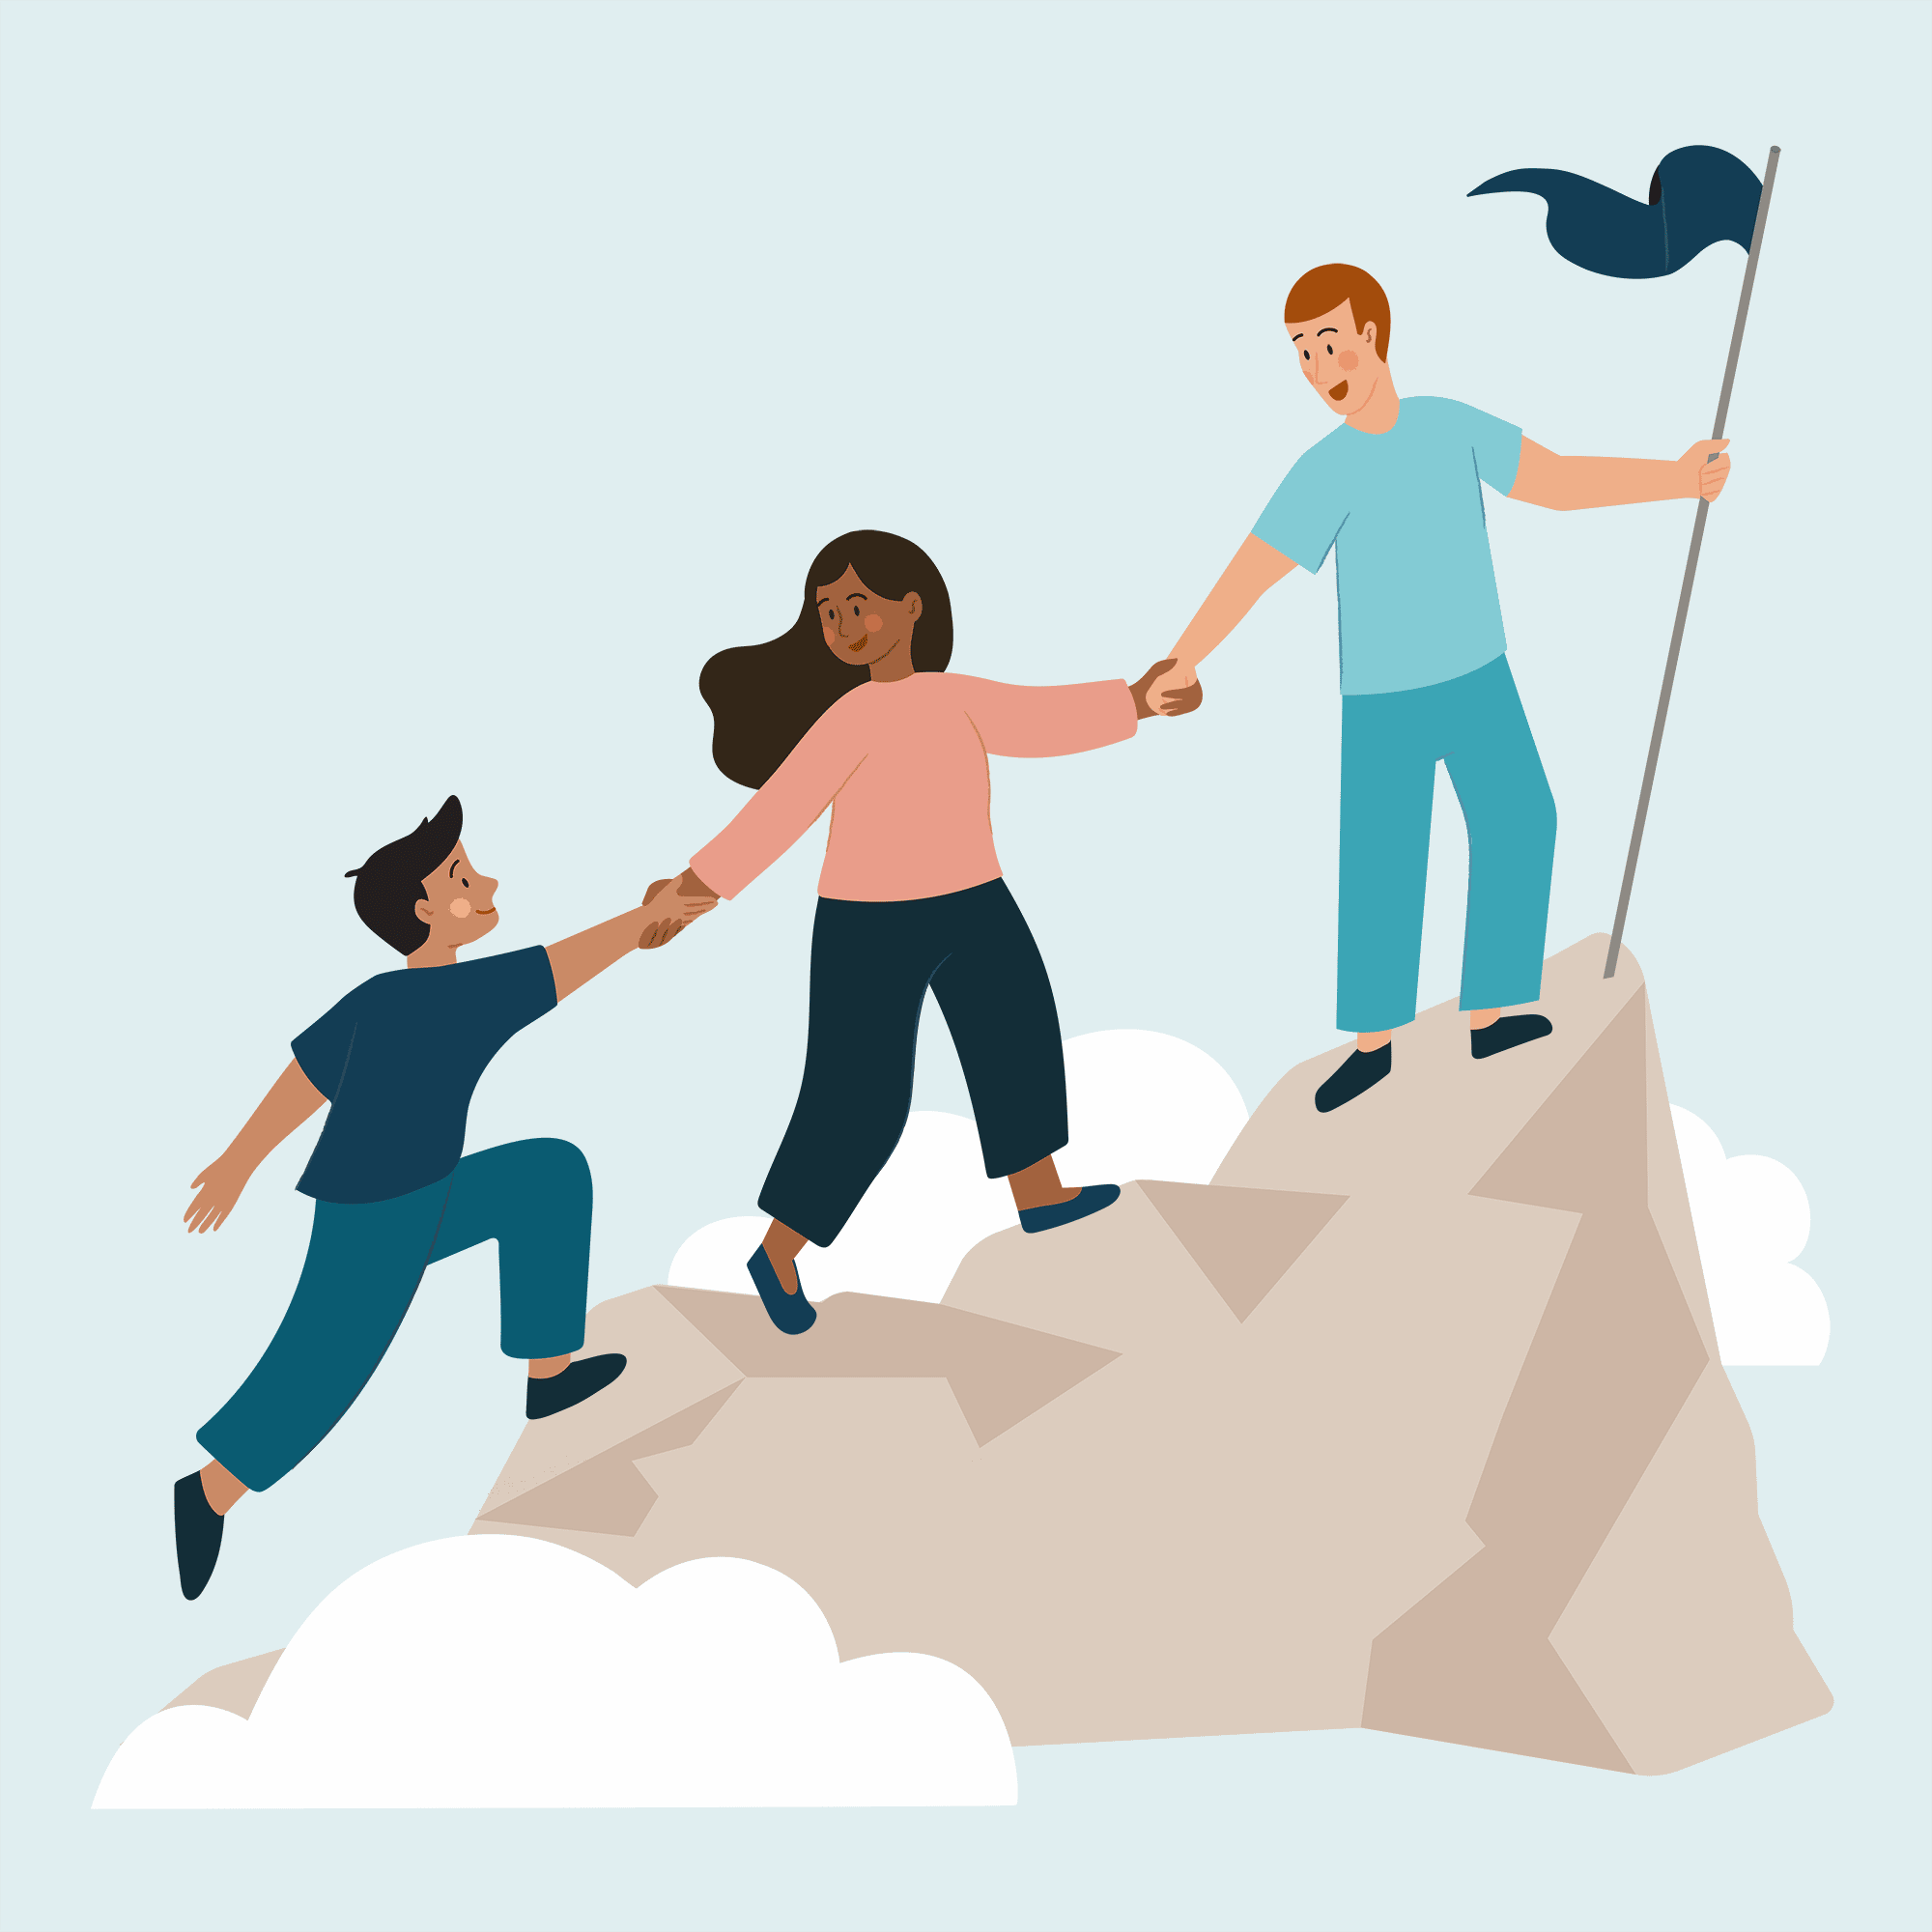 Illustration of three people climbing a mountain